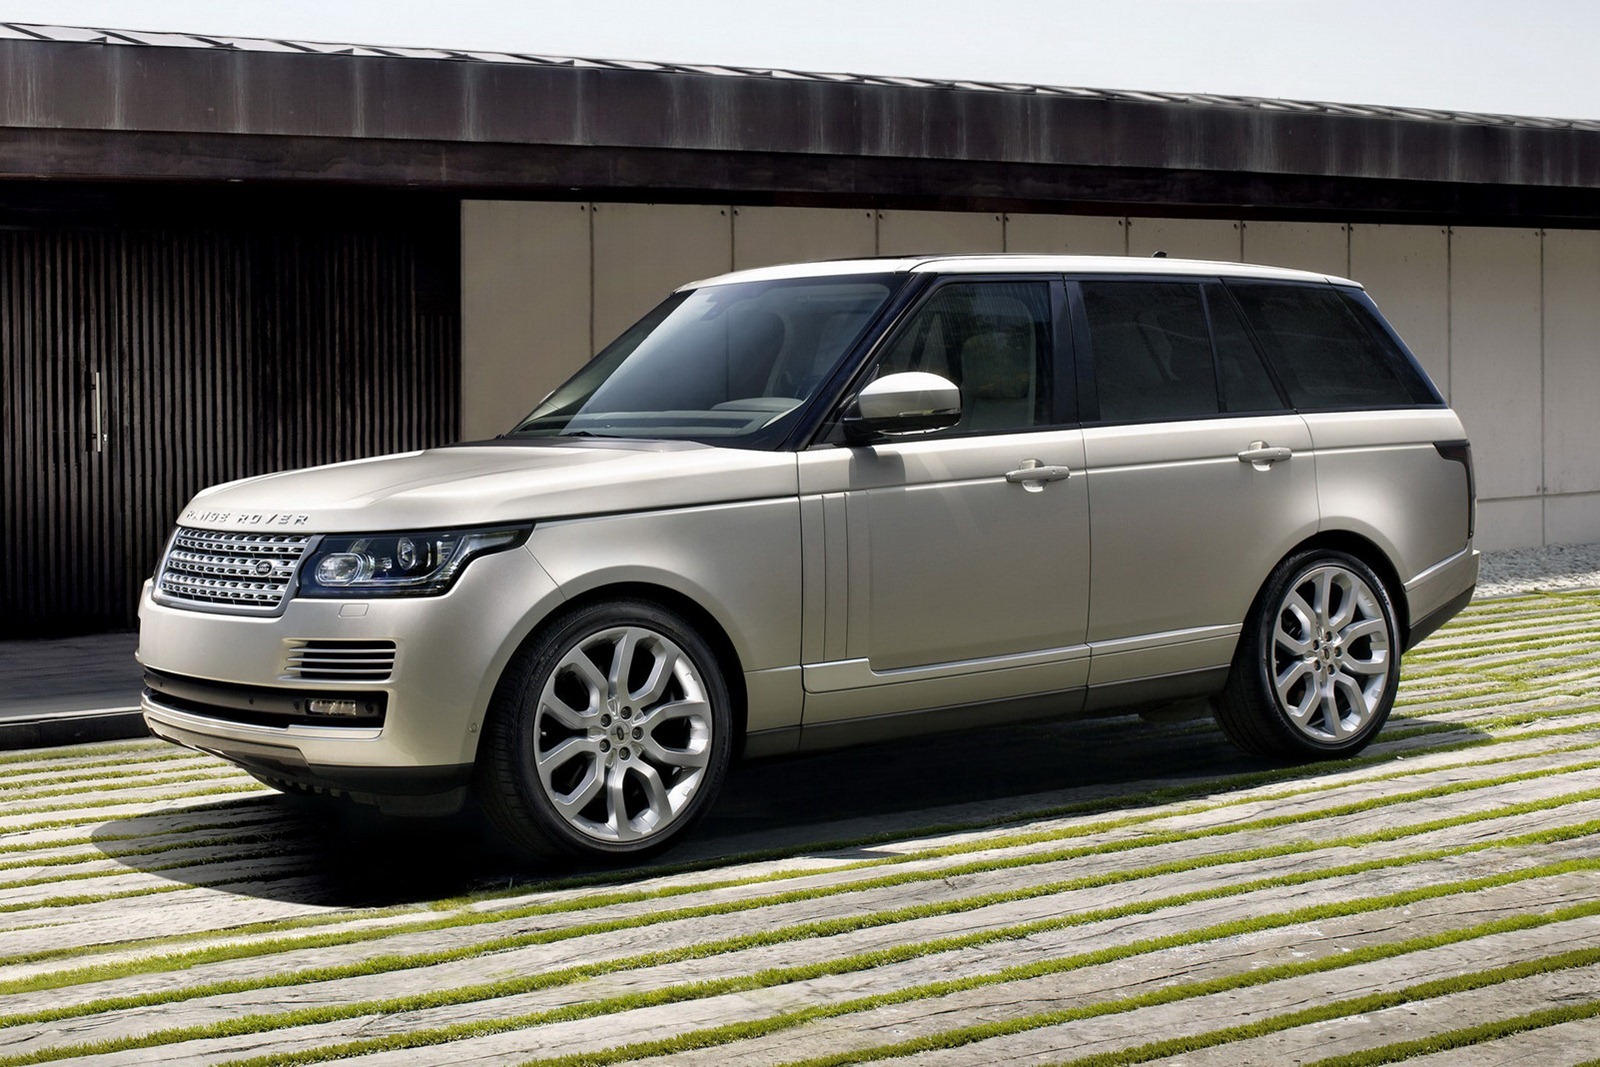 Noul Range Rover pastreaza stilul clasic si masiv al precedentei generatii